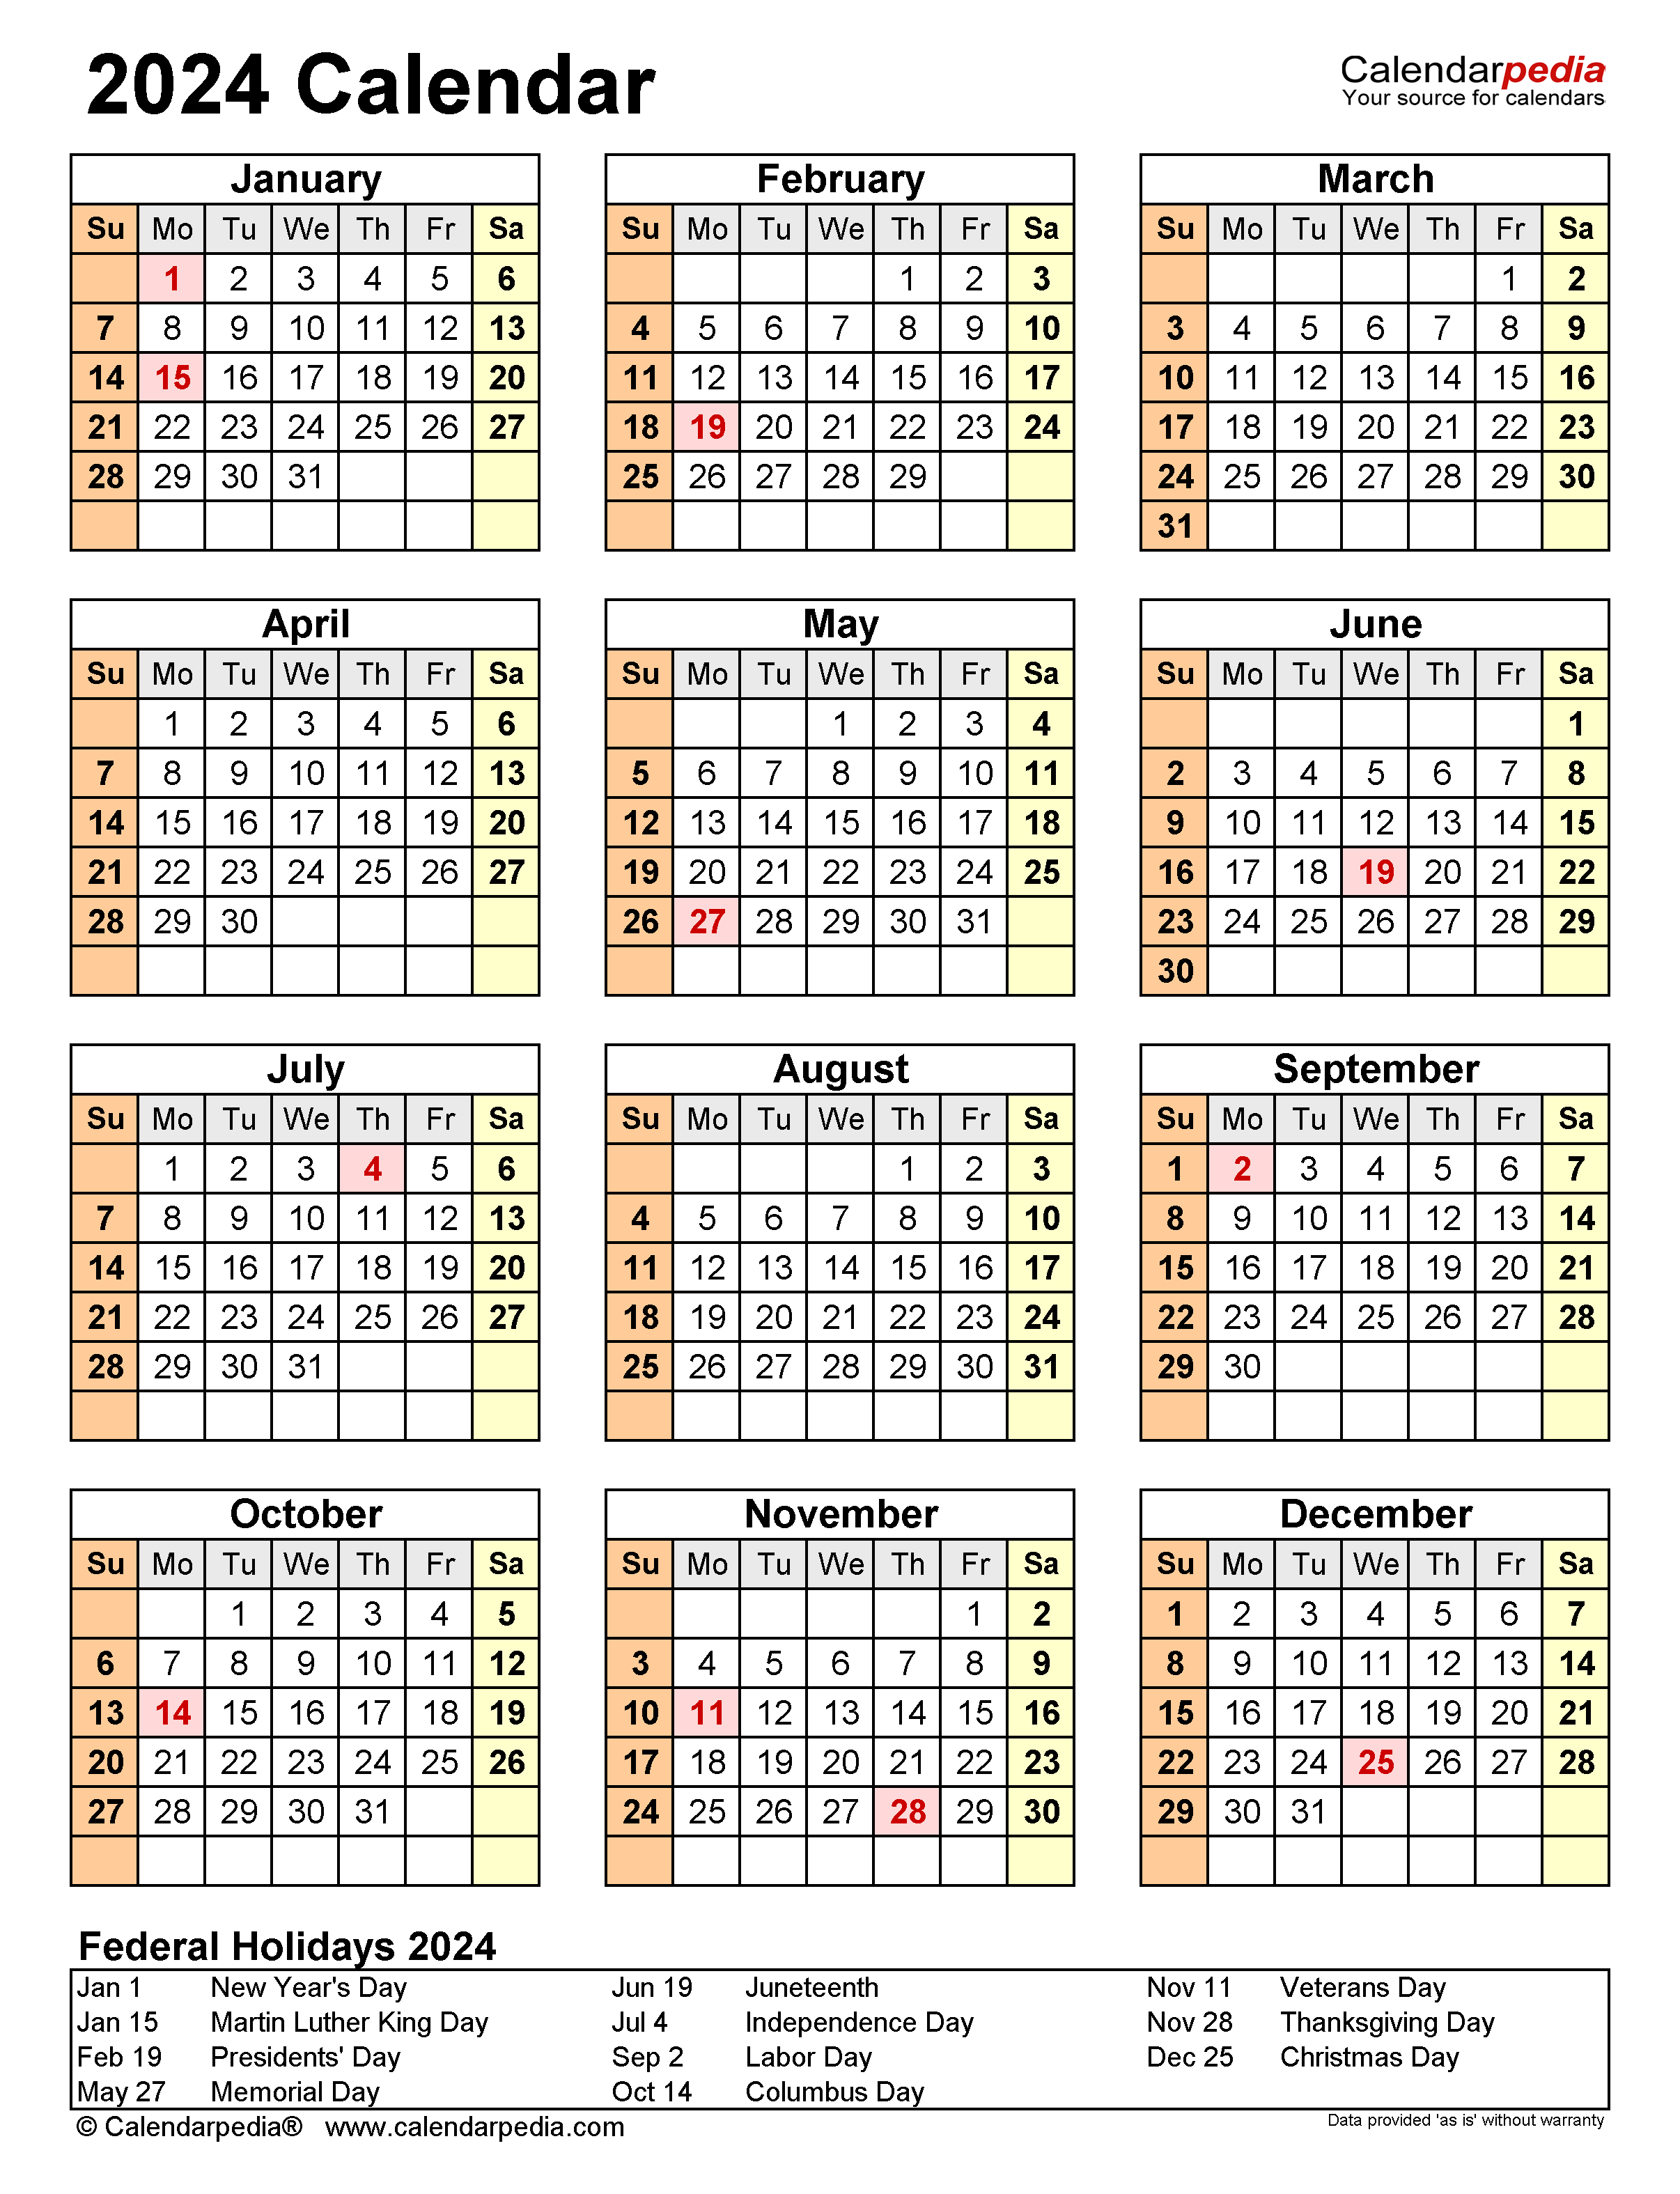 Free Printable 2024 Calendar With Holidays Crownflourmills | Free Printable 2024 Calendar With Holidays Monthly